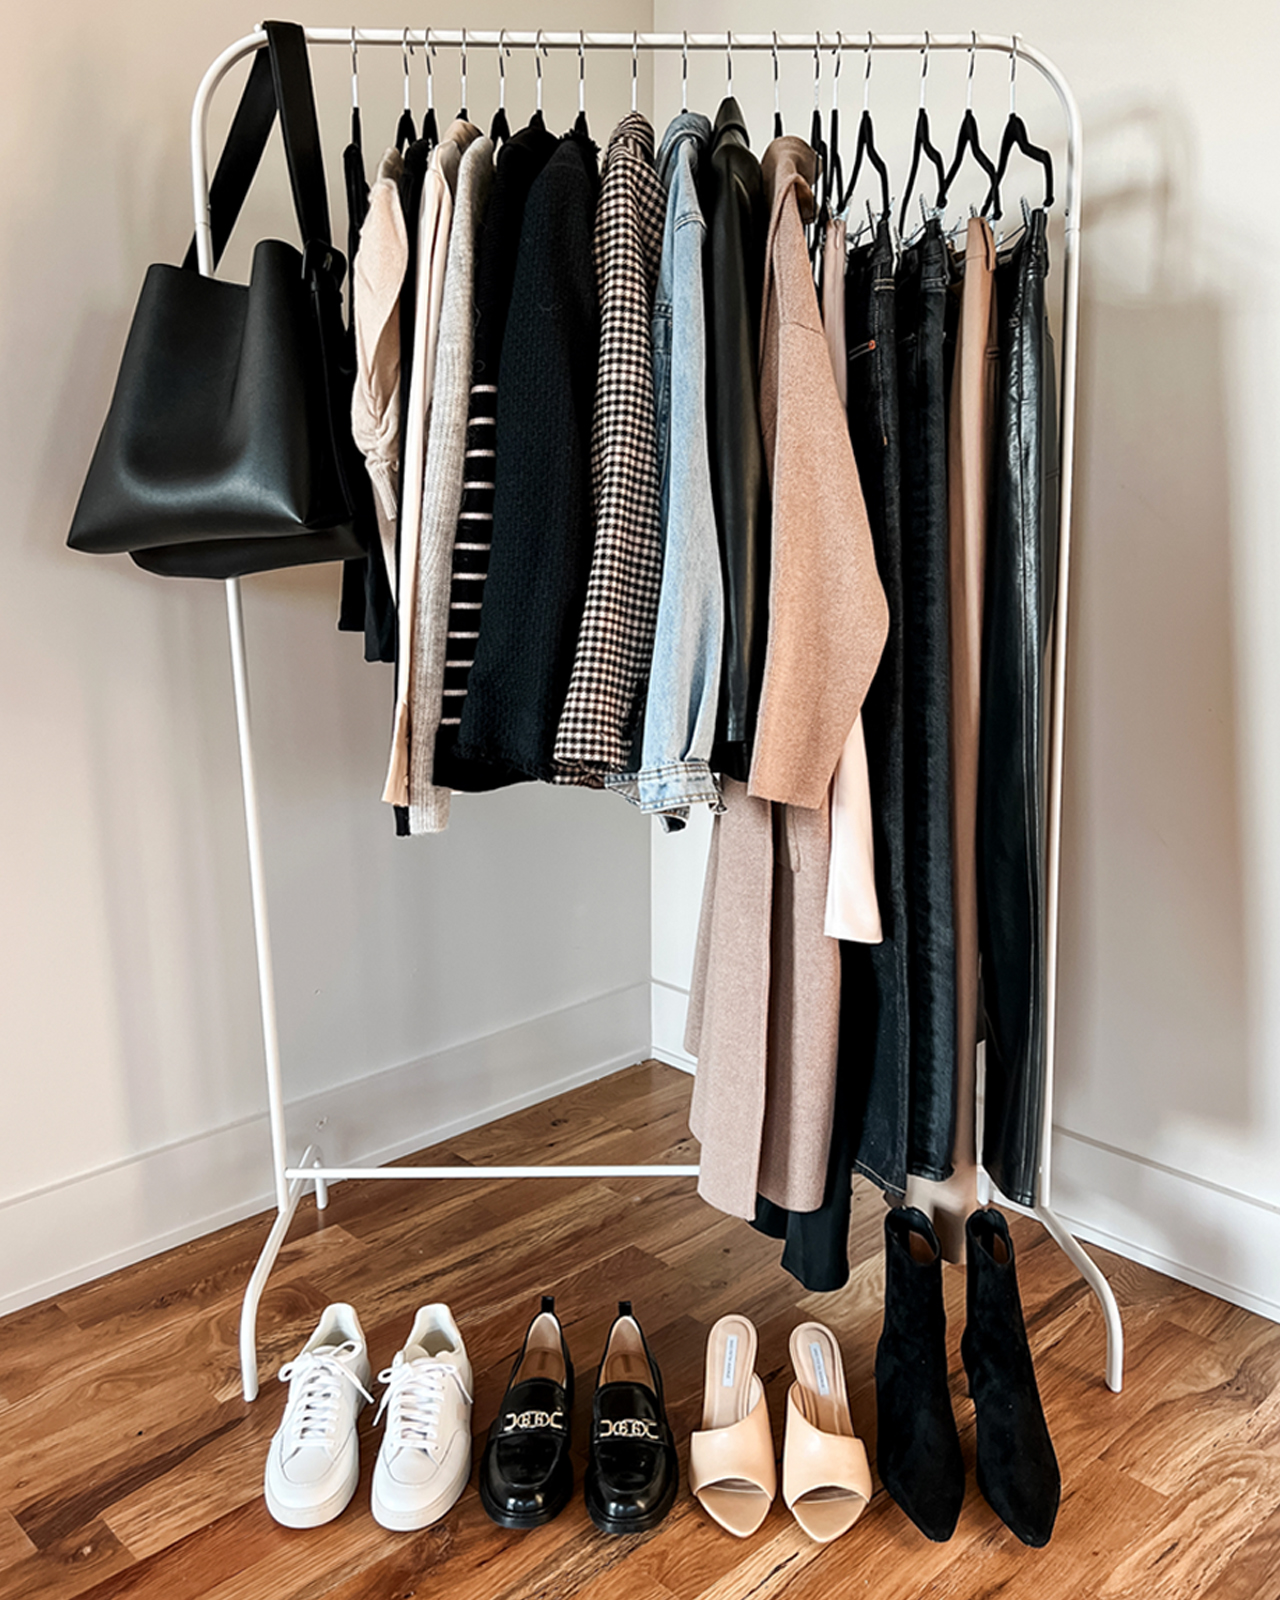 10 Stylish Fall Outfit Ideas You Can Wear Anywhere - Mia Mia Mine